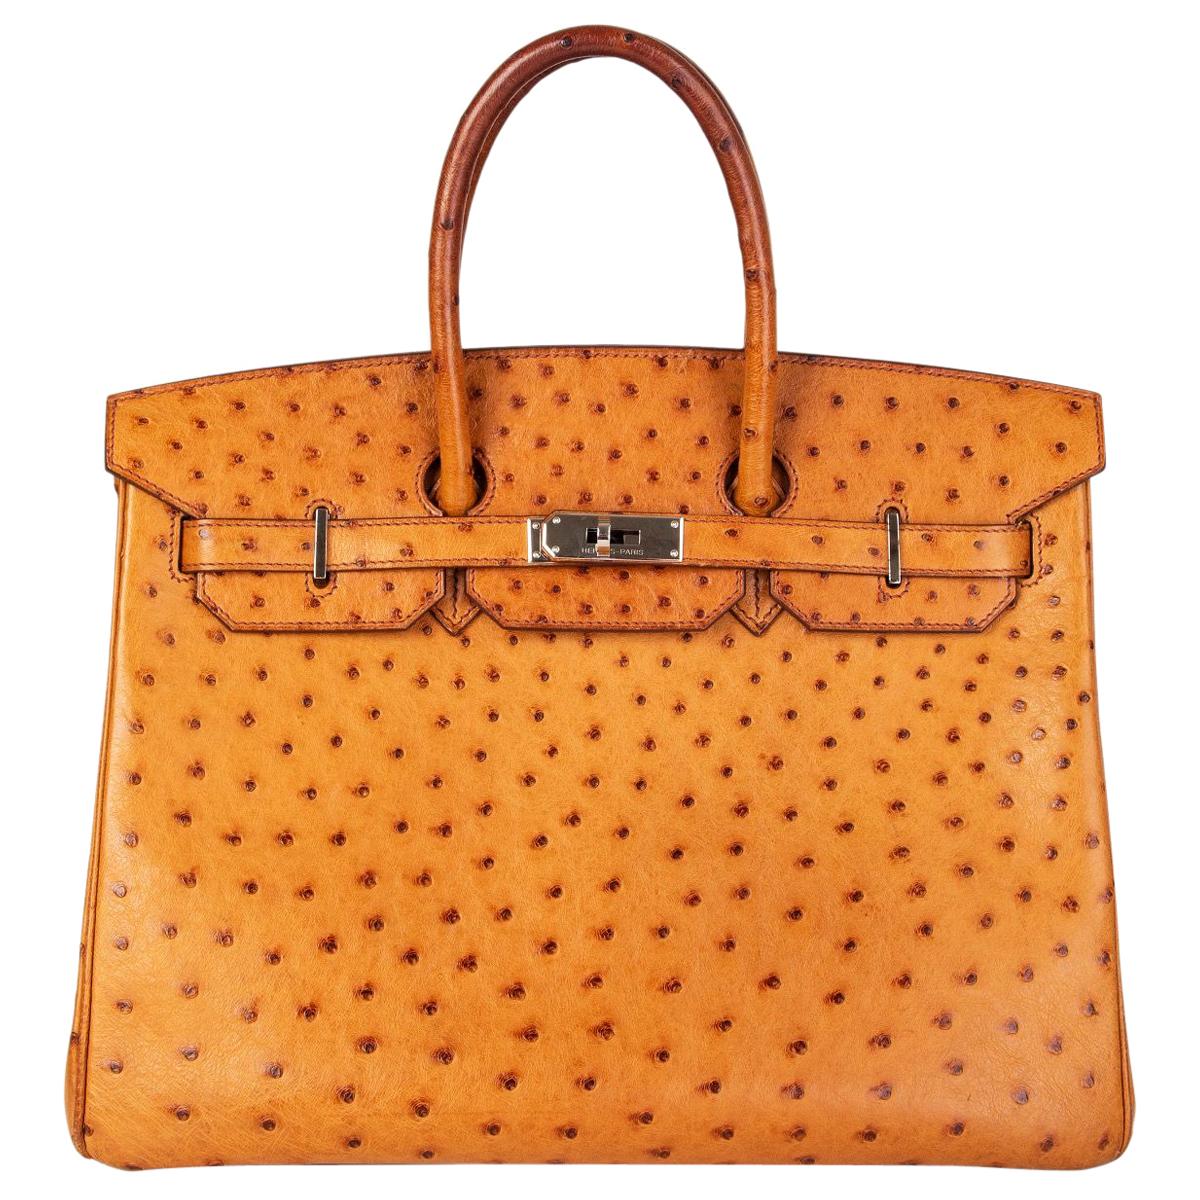 HERMES Cognac brown OSTRICH leather BIRKIN 35 Bag